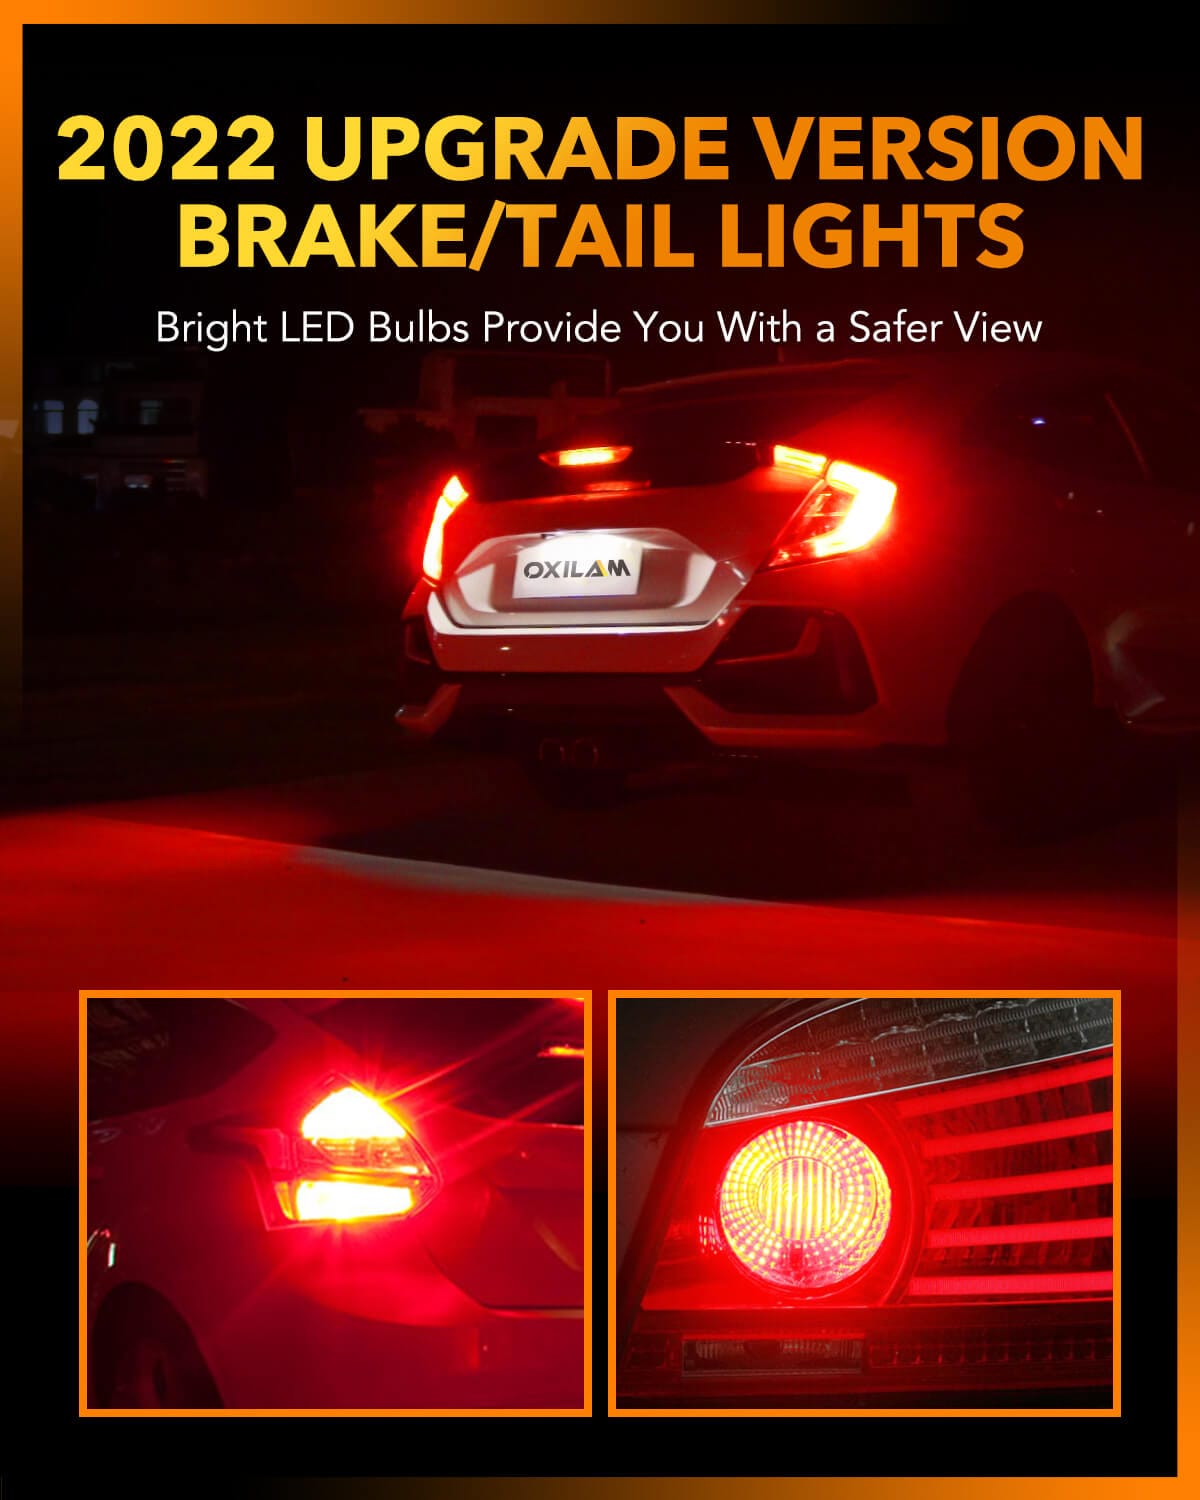 7440 7443 Strobe LED Bulbs Flashing Brake, Reverse Lights W21W